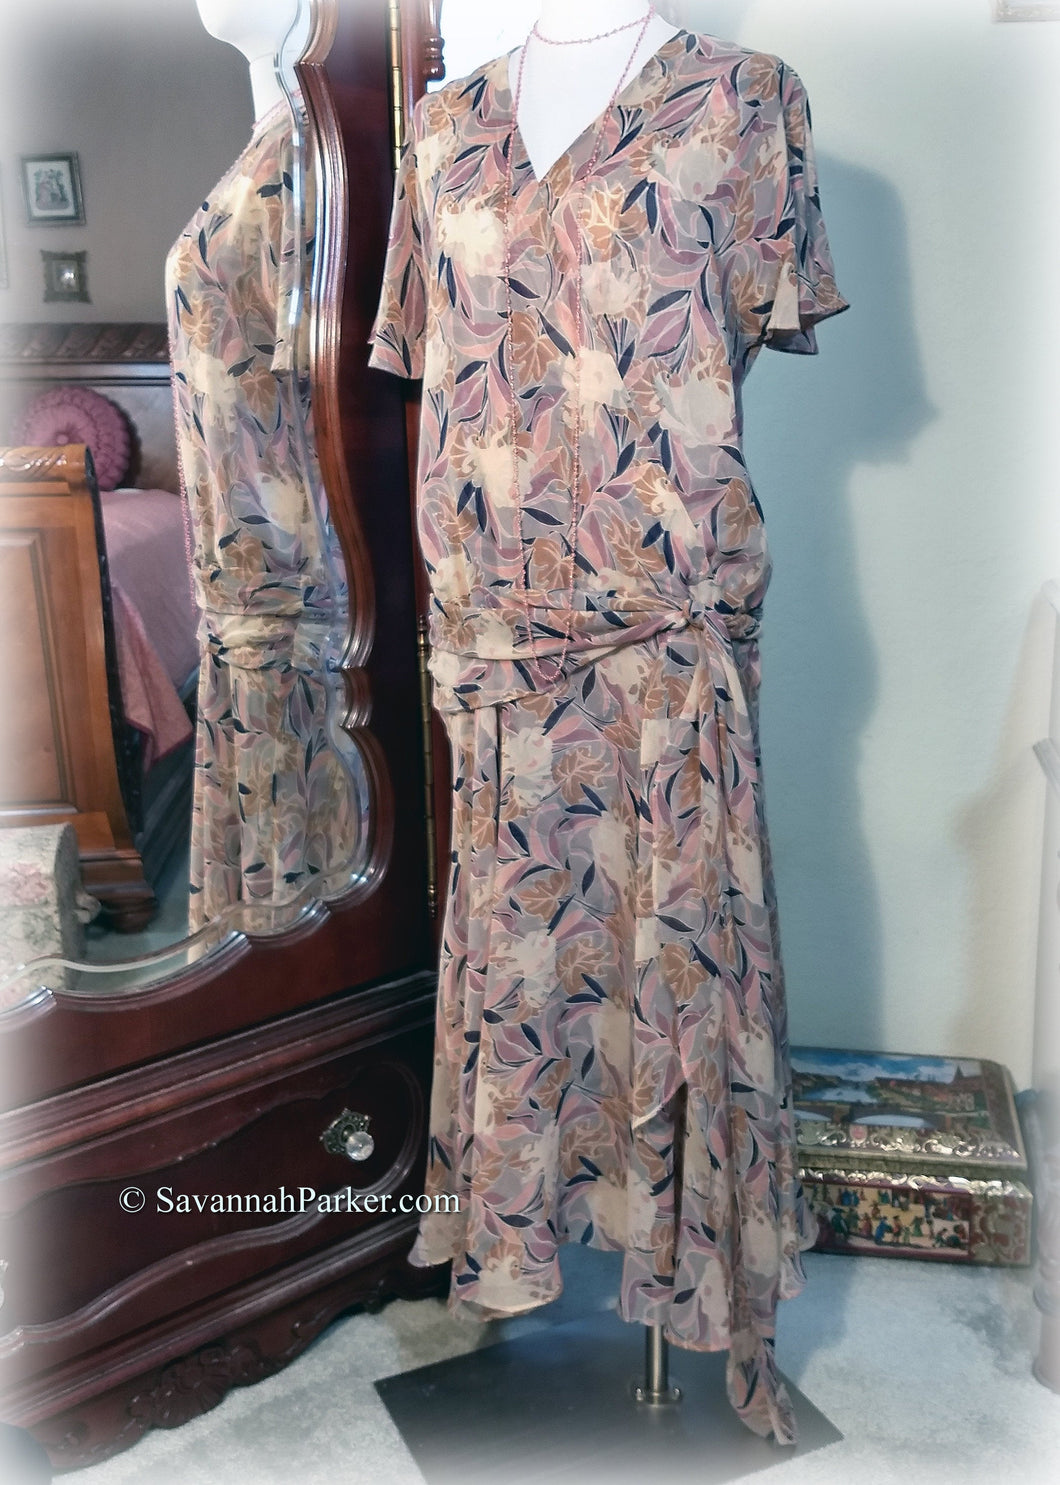 SOLD OUT Exquisite Art Deco Vintage 1920s Inspired Silk Chiffon Designer Nancy Johnson Pinks Blues Grey Vintage Style Print Garden Party Dress